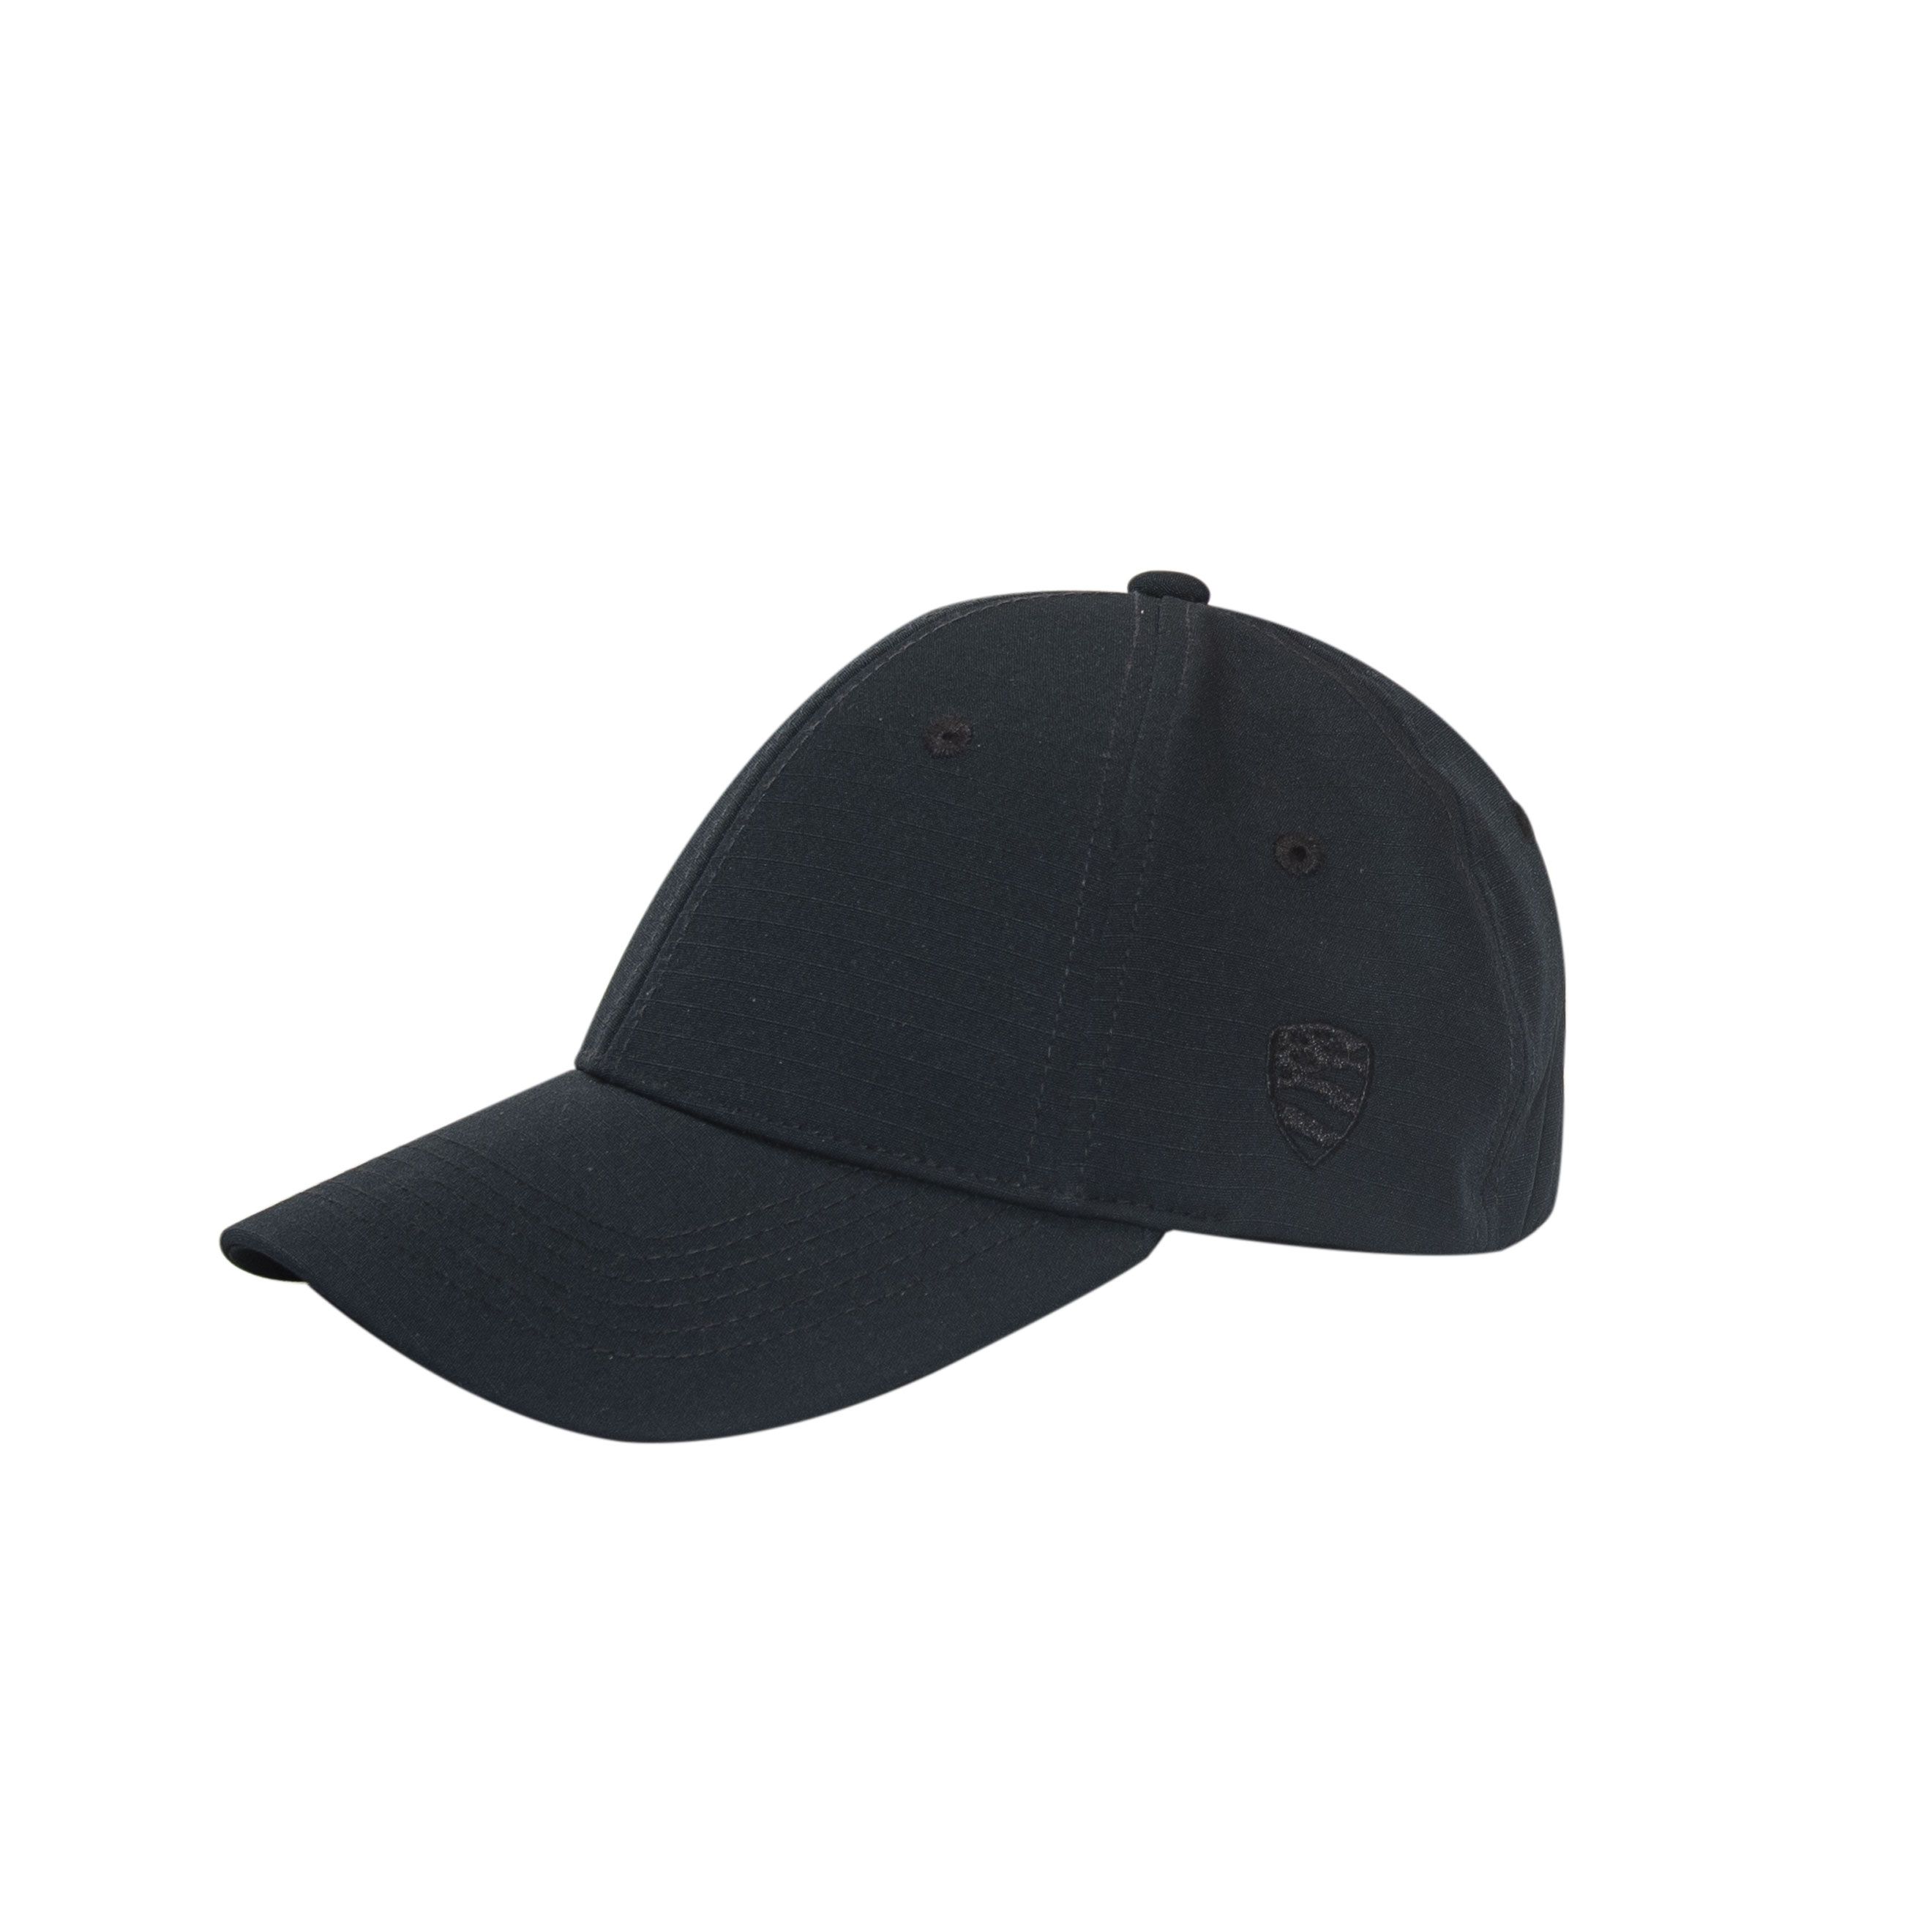 197 - FlexRS Cap - Summer patrol Blauer hat - Fitted